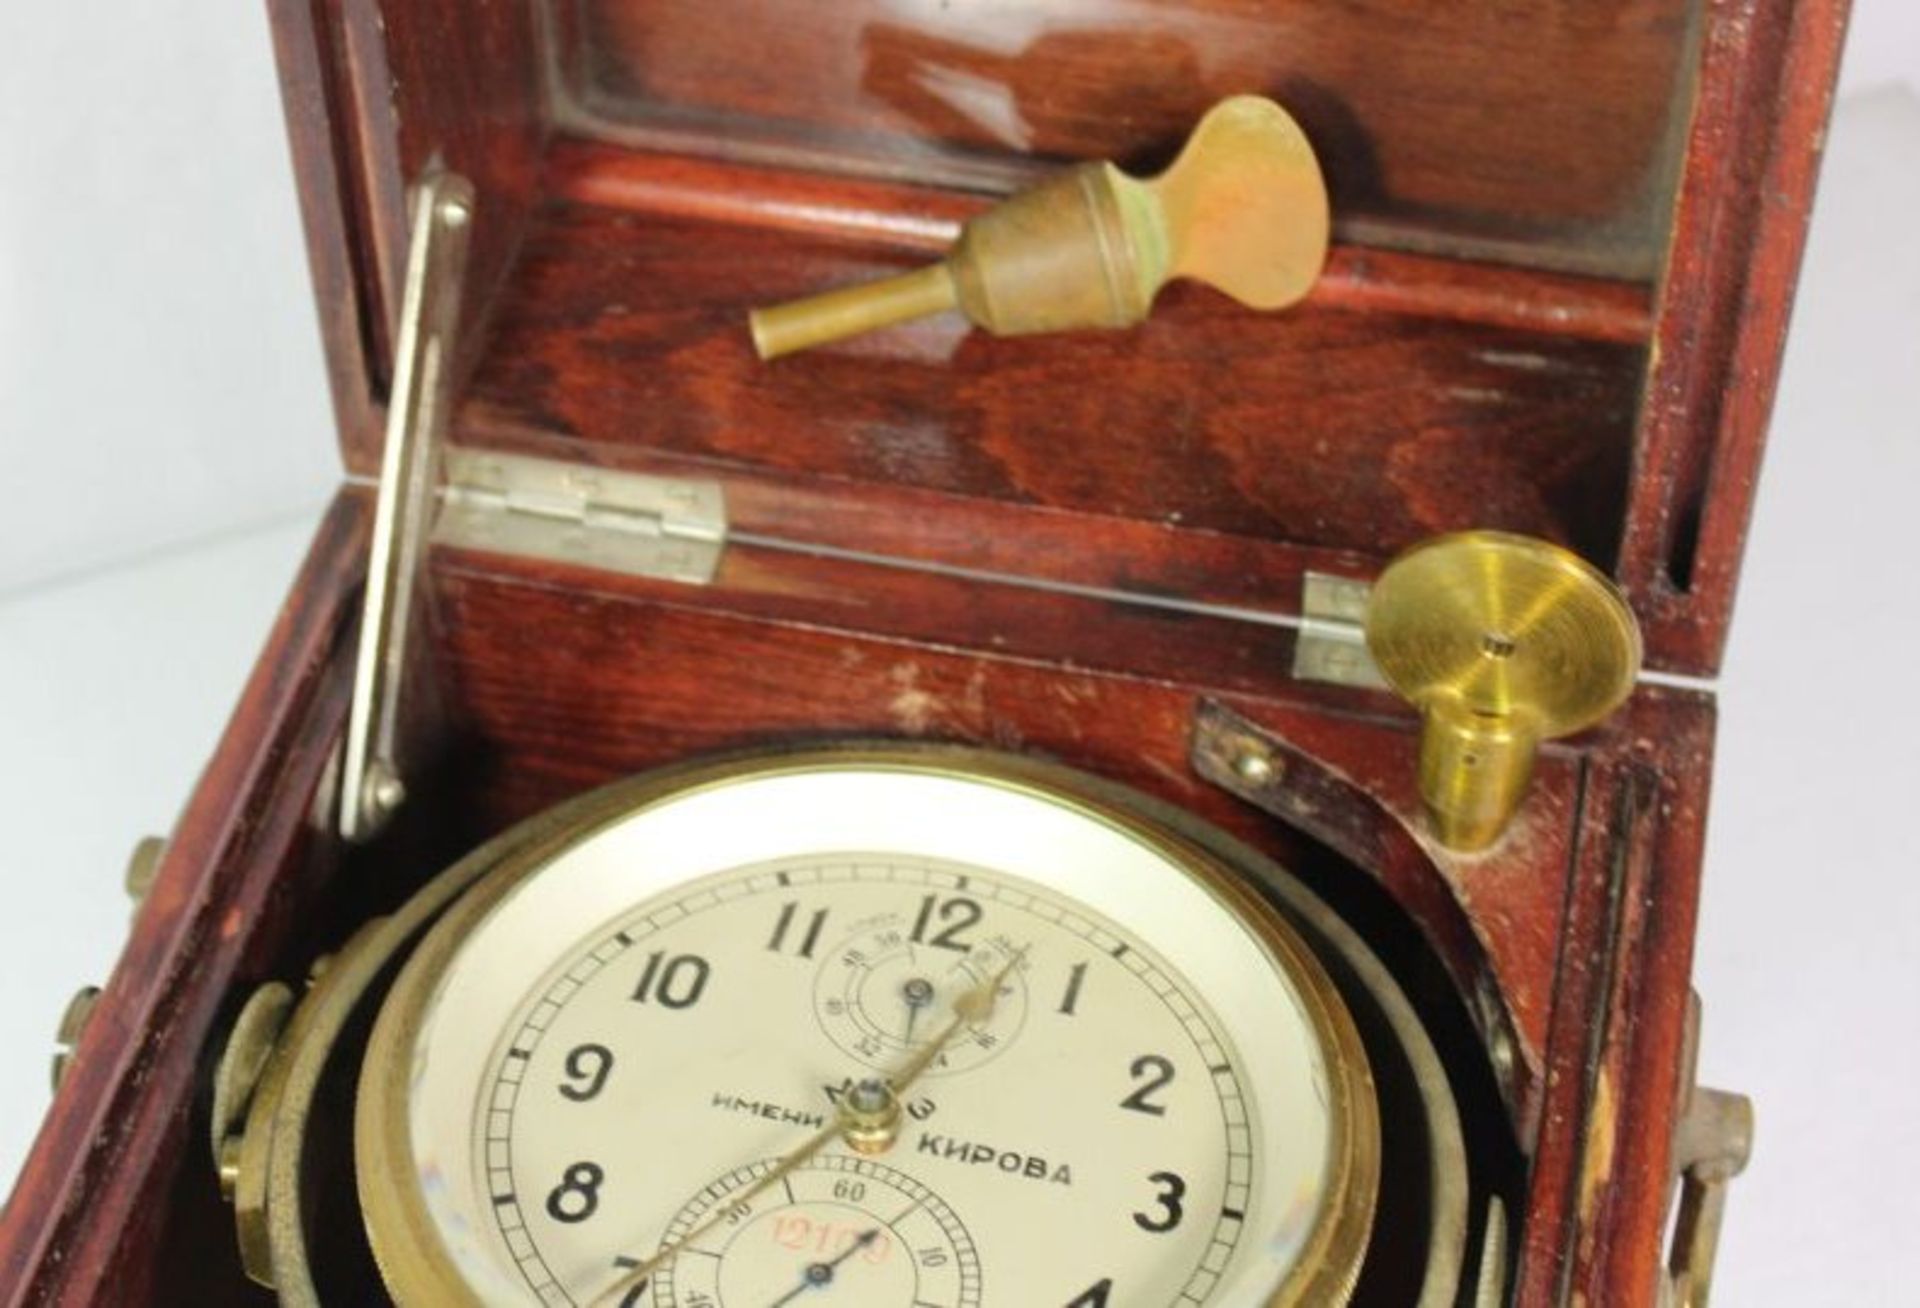 Schiffschronometer "Erste Moskauer Uhrenfabrik Kirowa", CCCP, Marinechronometer Poljot, , Nr. 12109, - Bild 2 aus 4